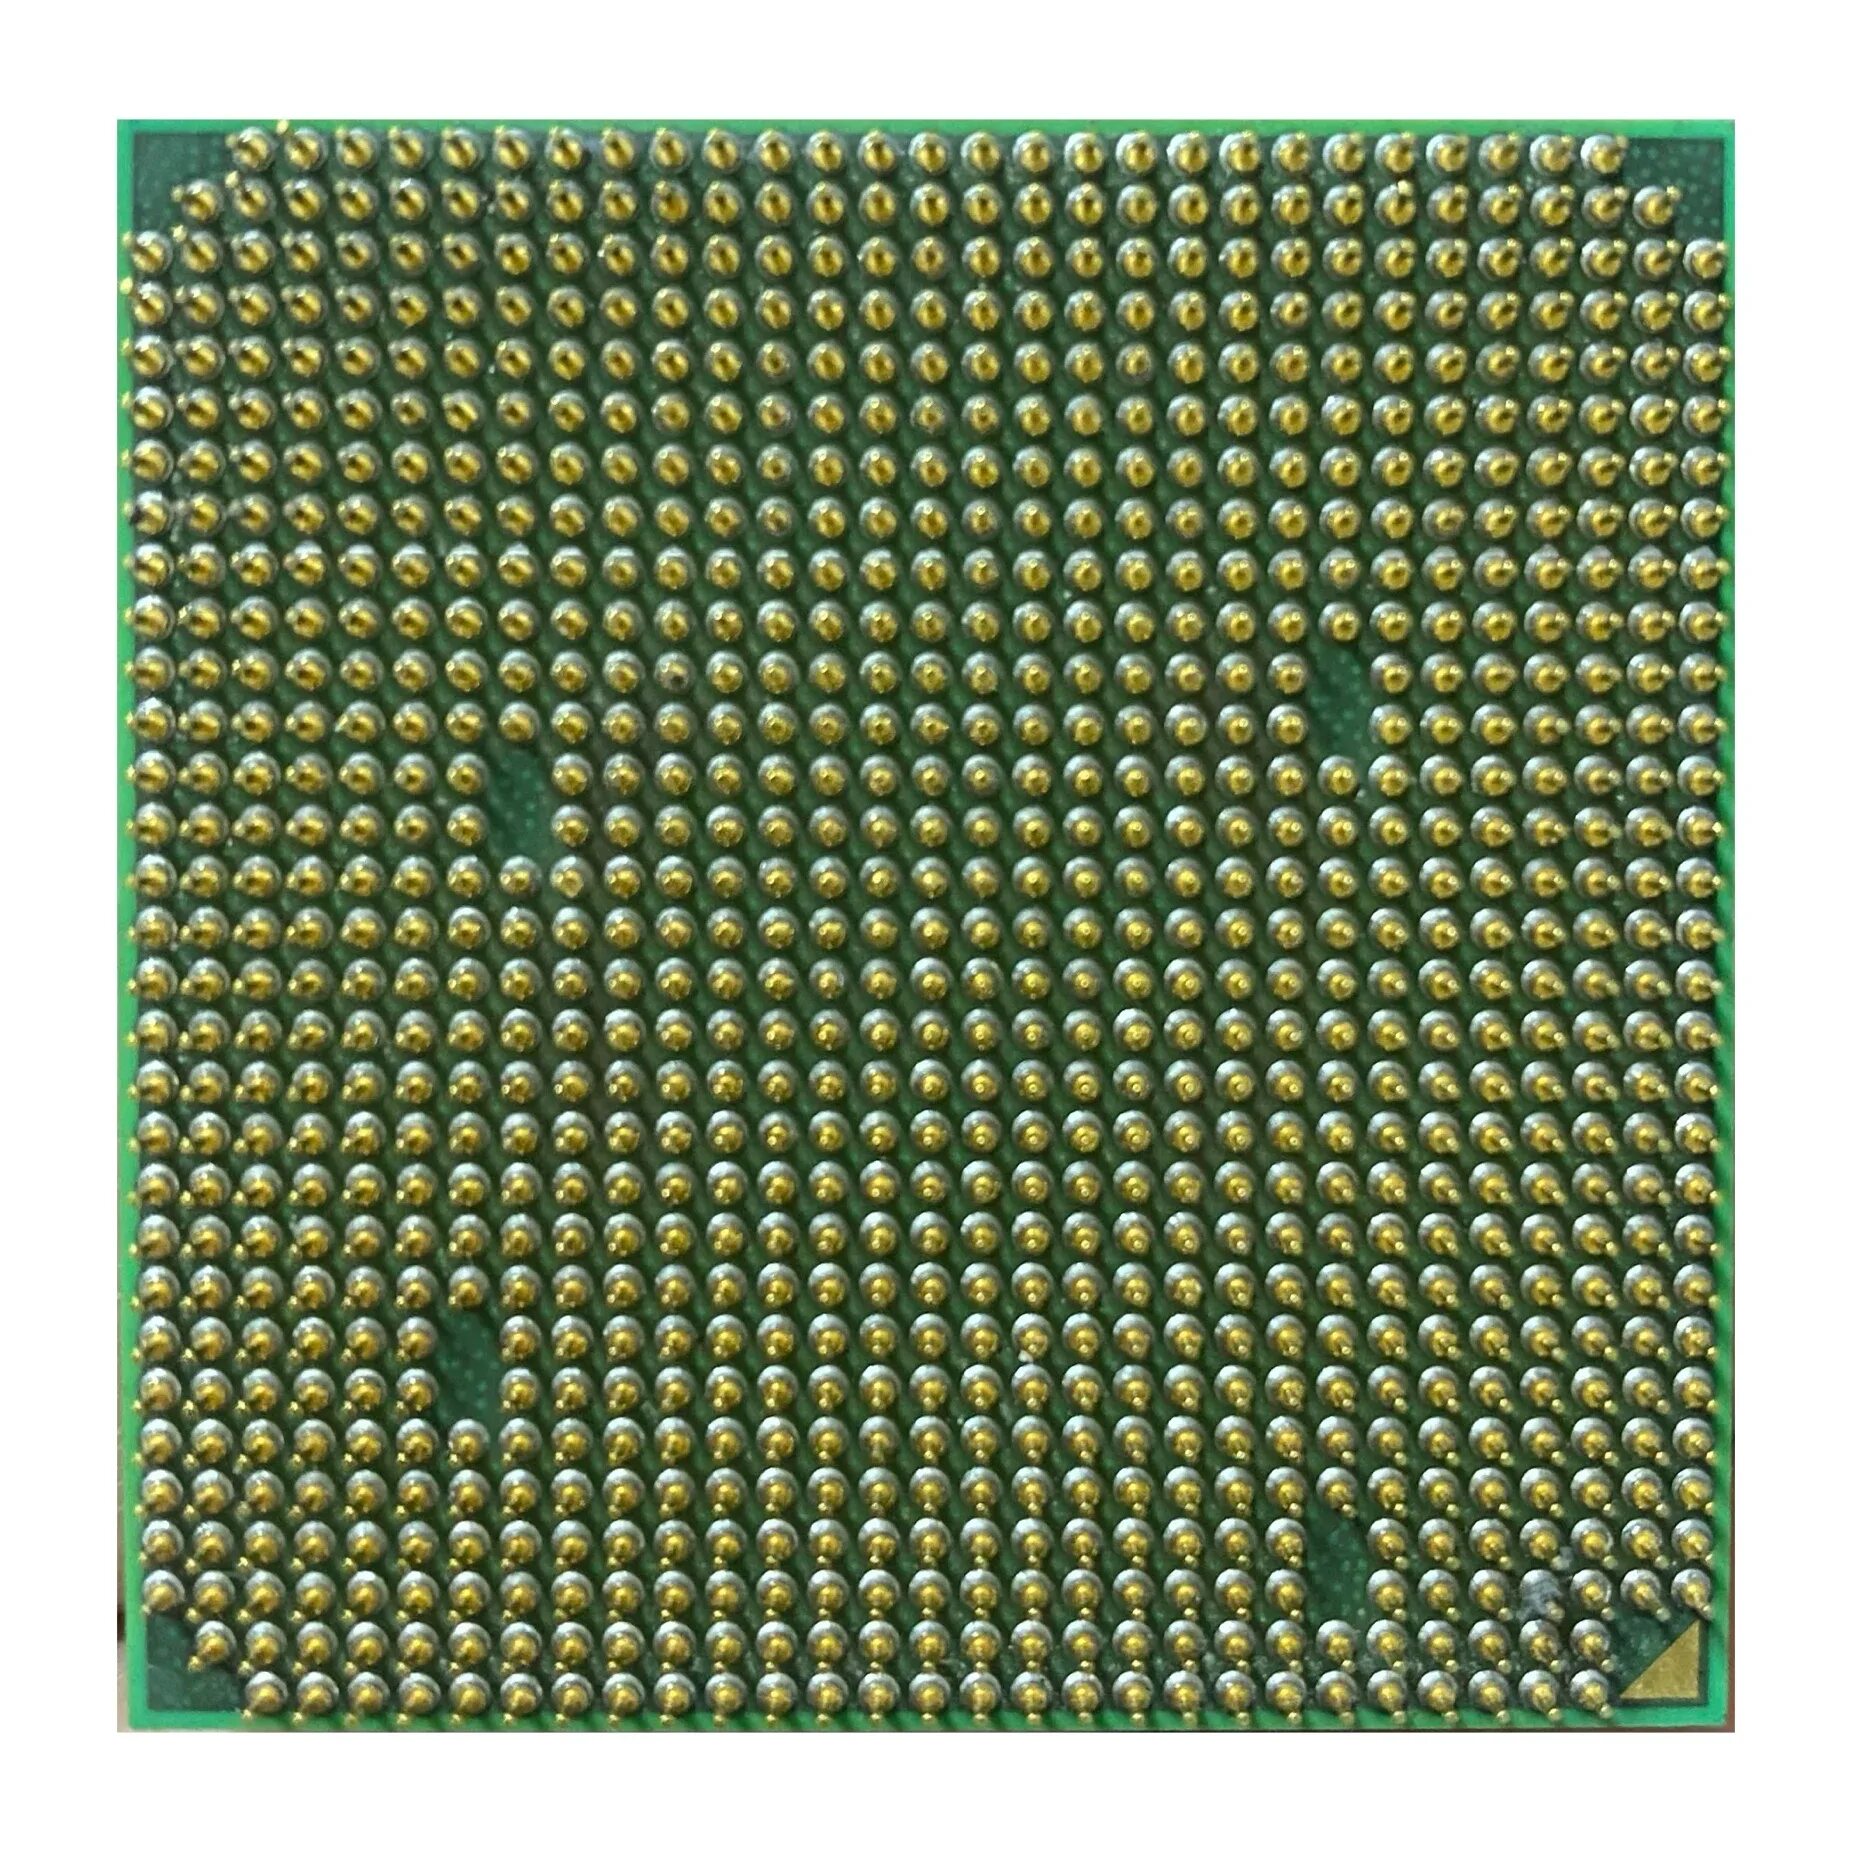 Athlon x2 сокет. Сокет ам2 940. Am2 сокет процессоры. AMD Athlon 64 x2 ada5600iaa6cz. Процессора AMD Athlon 64 x2 Dual Core Processor 5000+.